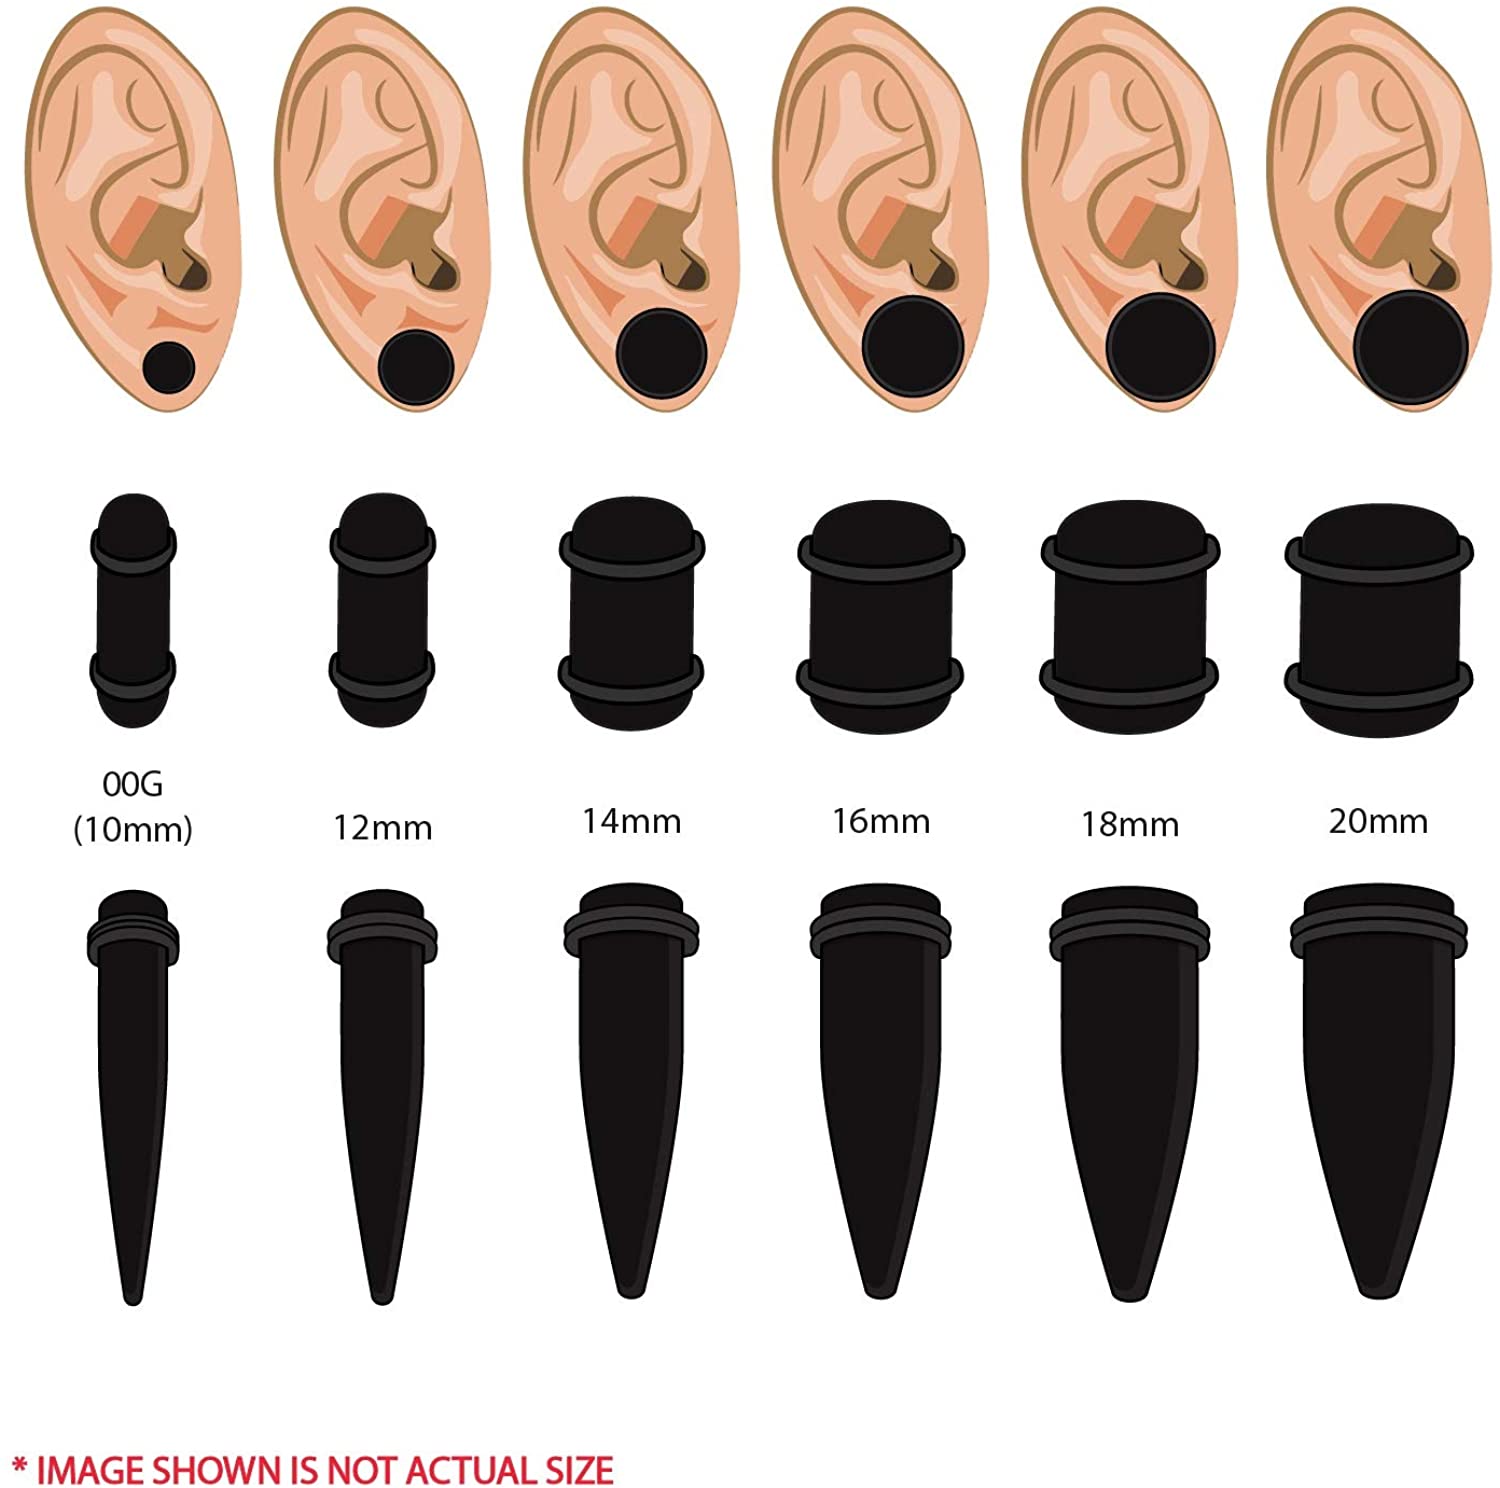 BodyJ4You 24PC Big Gauges Kit Ear Stretching 00G 20mm Black Acrylic Tapers Plugs Piercing Set All Black Ee79f05f502fc8 